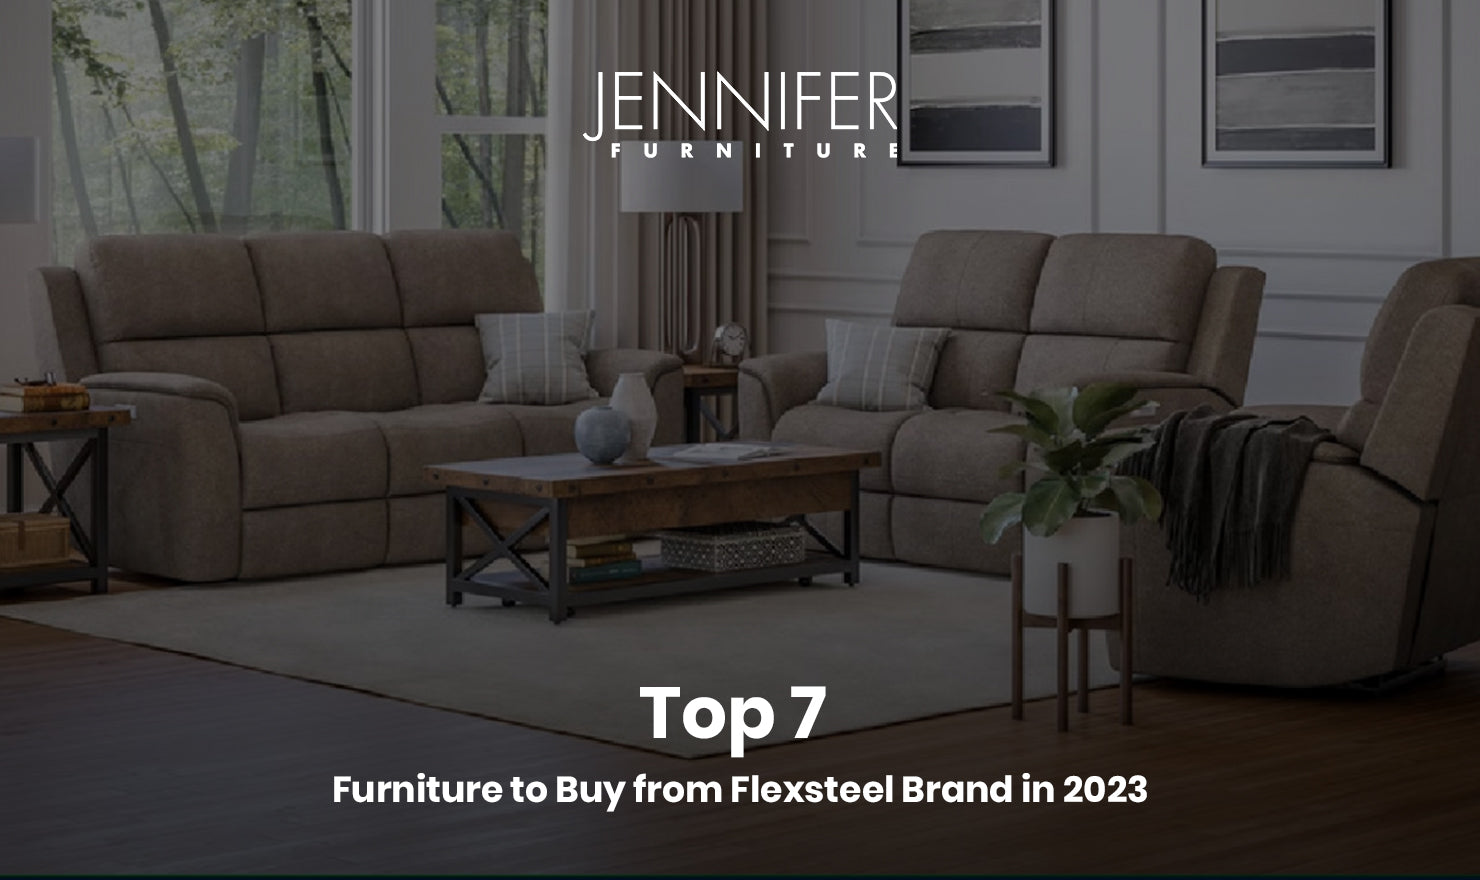 Top 7 Furniture to Buy from Flexsteel Brand in 2023